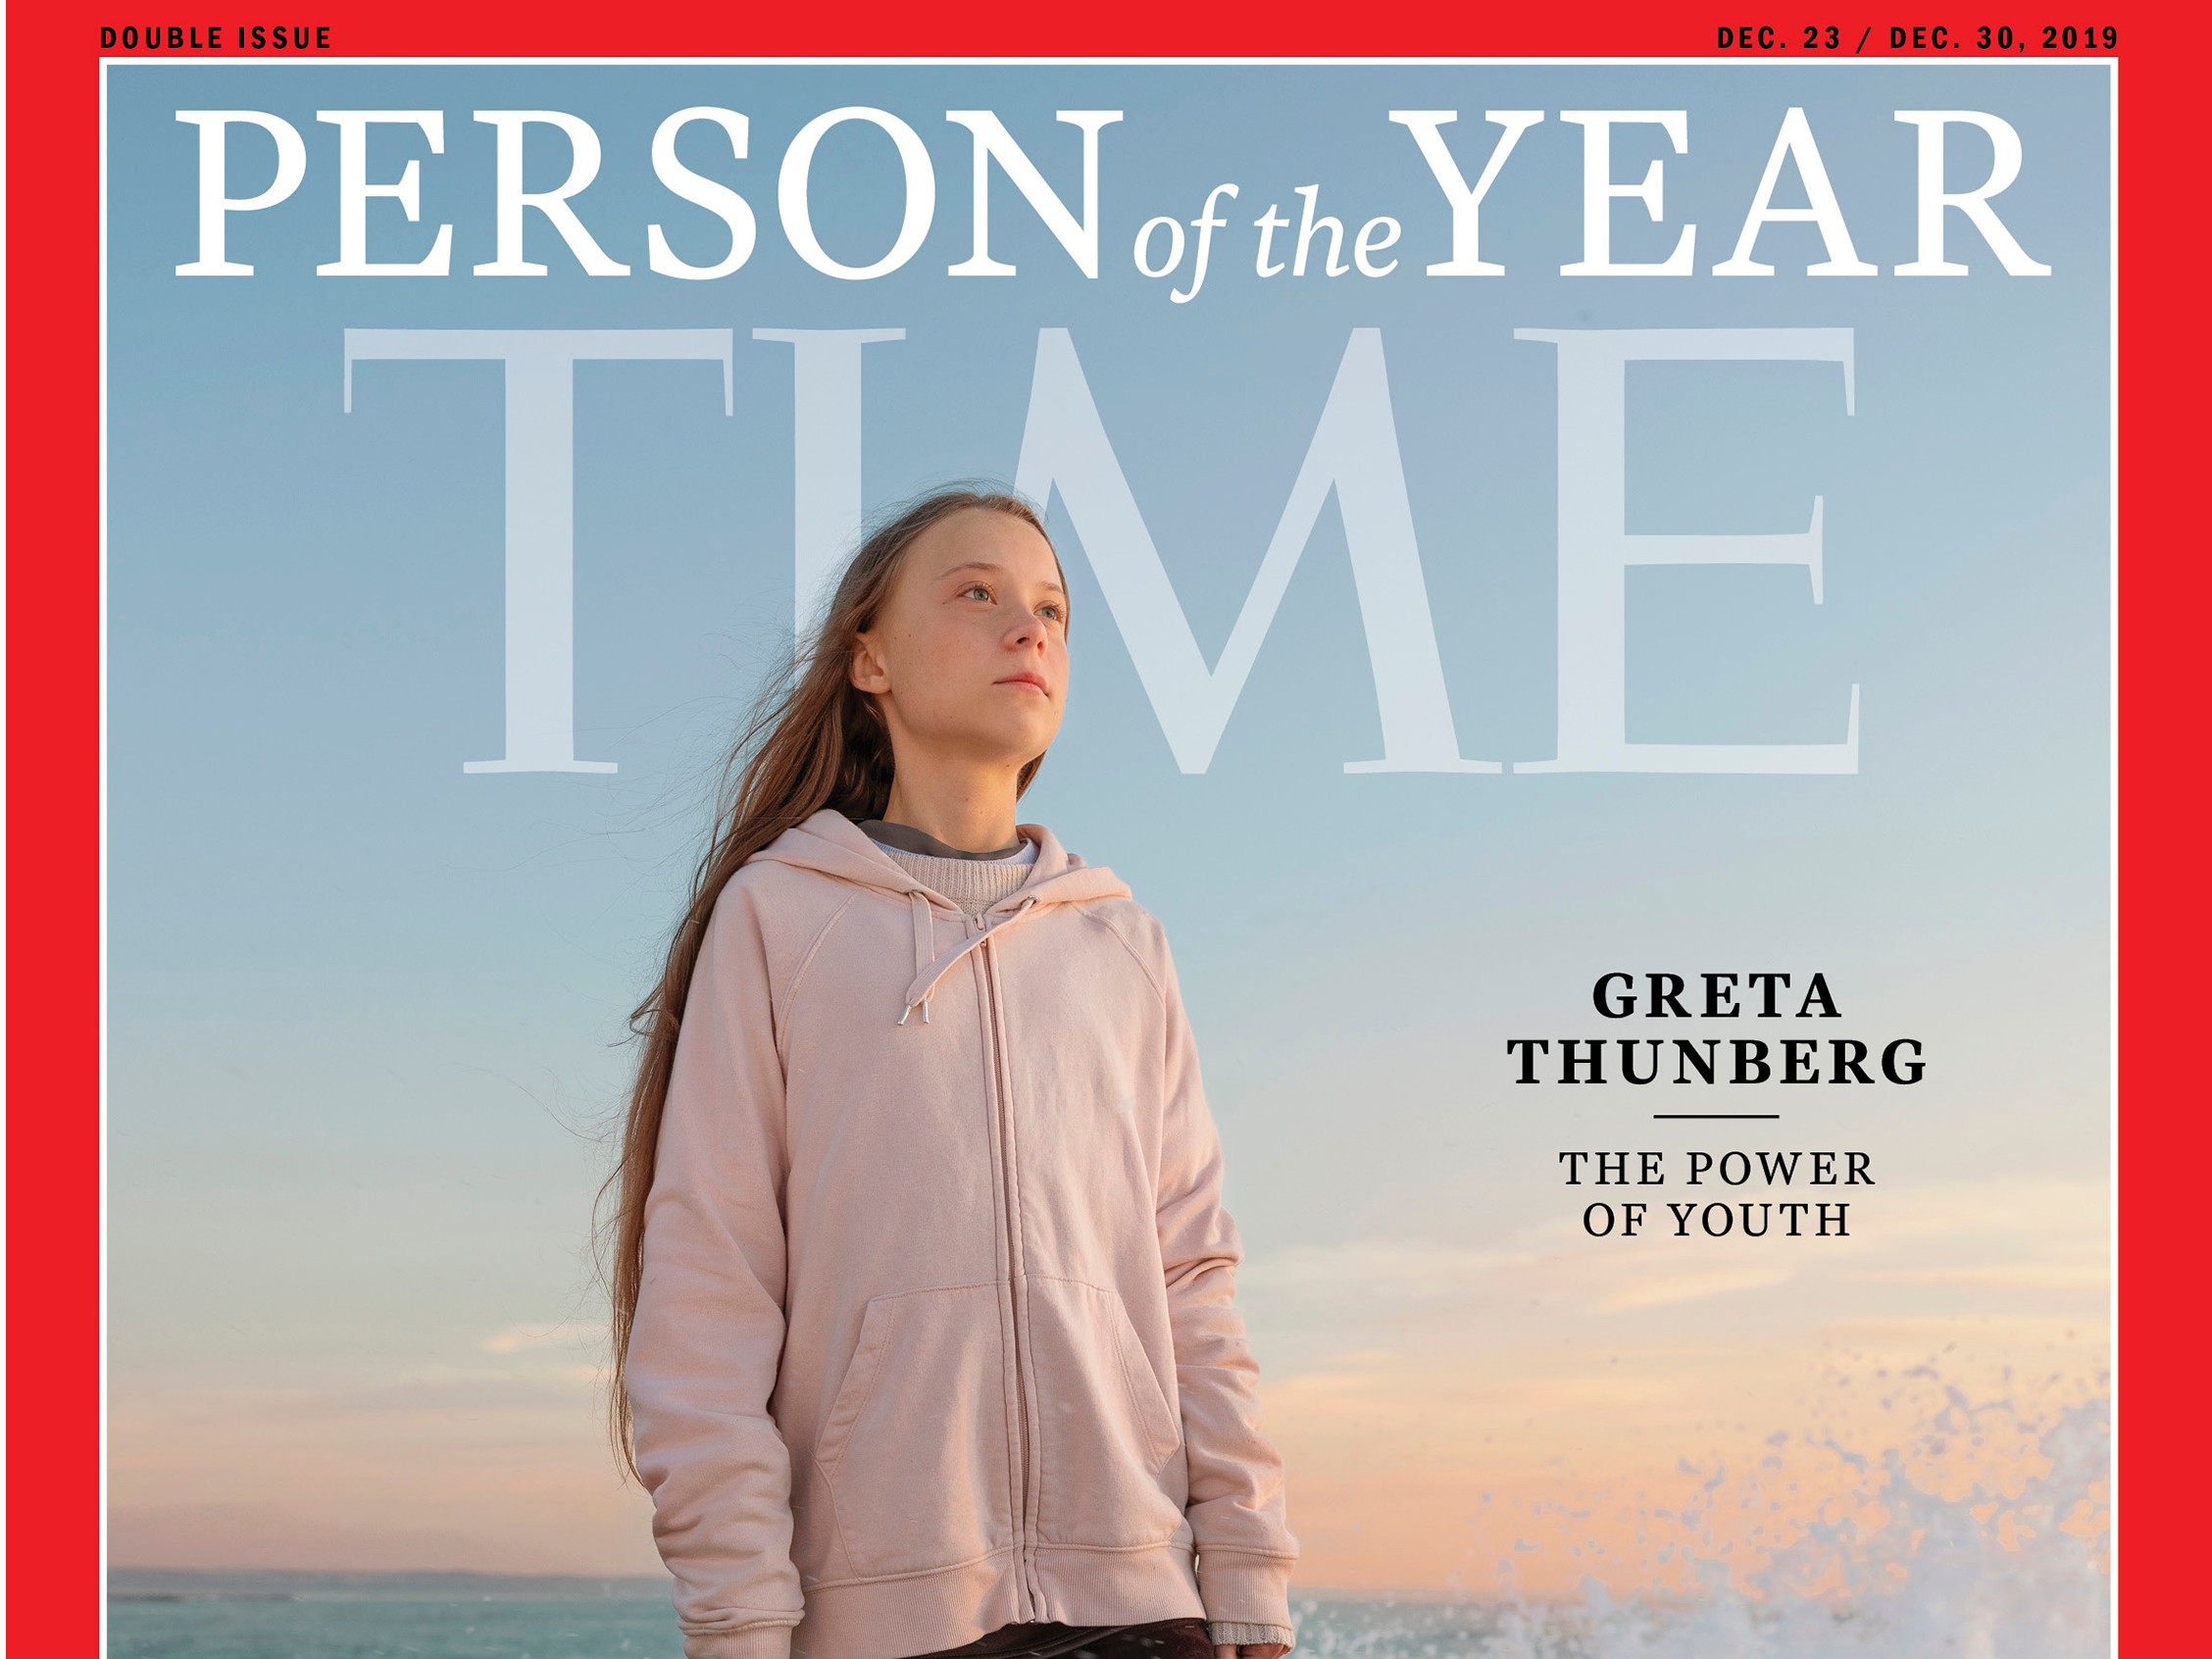 Greta Thunberg op de cover van Time Magazine. Foto: Time via AP